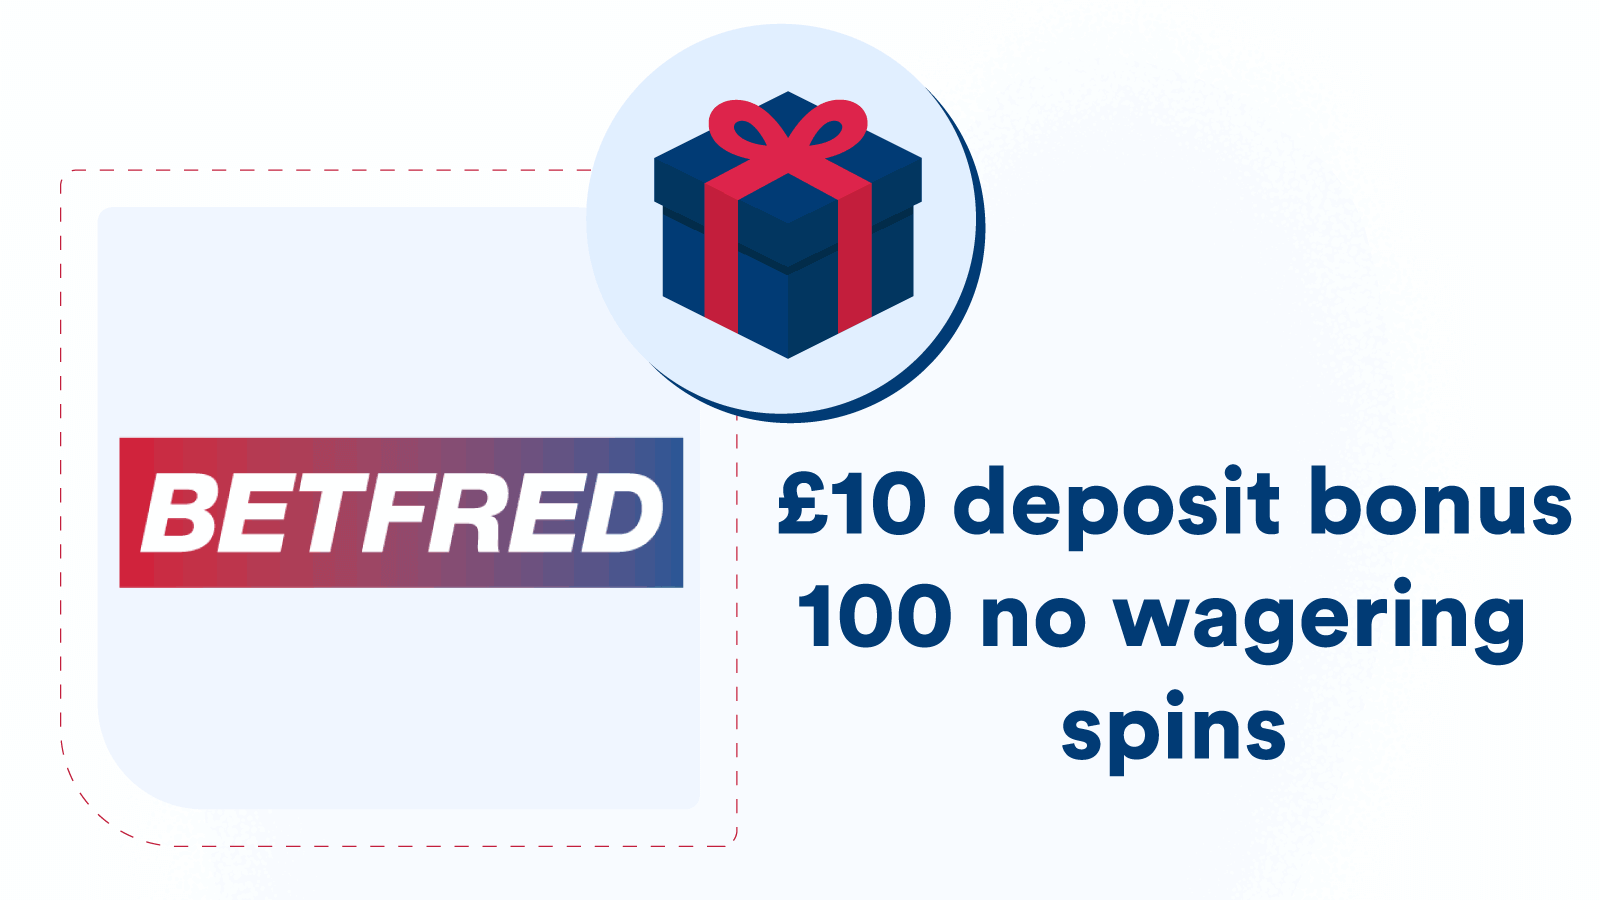 Best £10 deposit bonus – 100 no wagering spins at Betfred